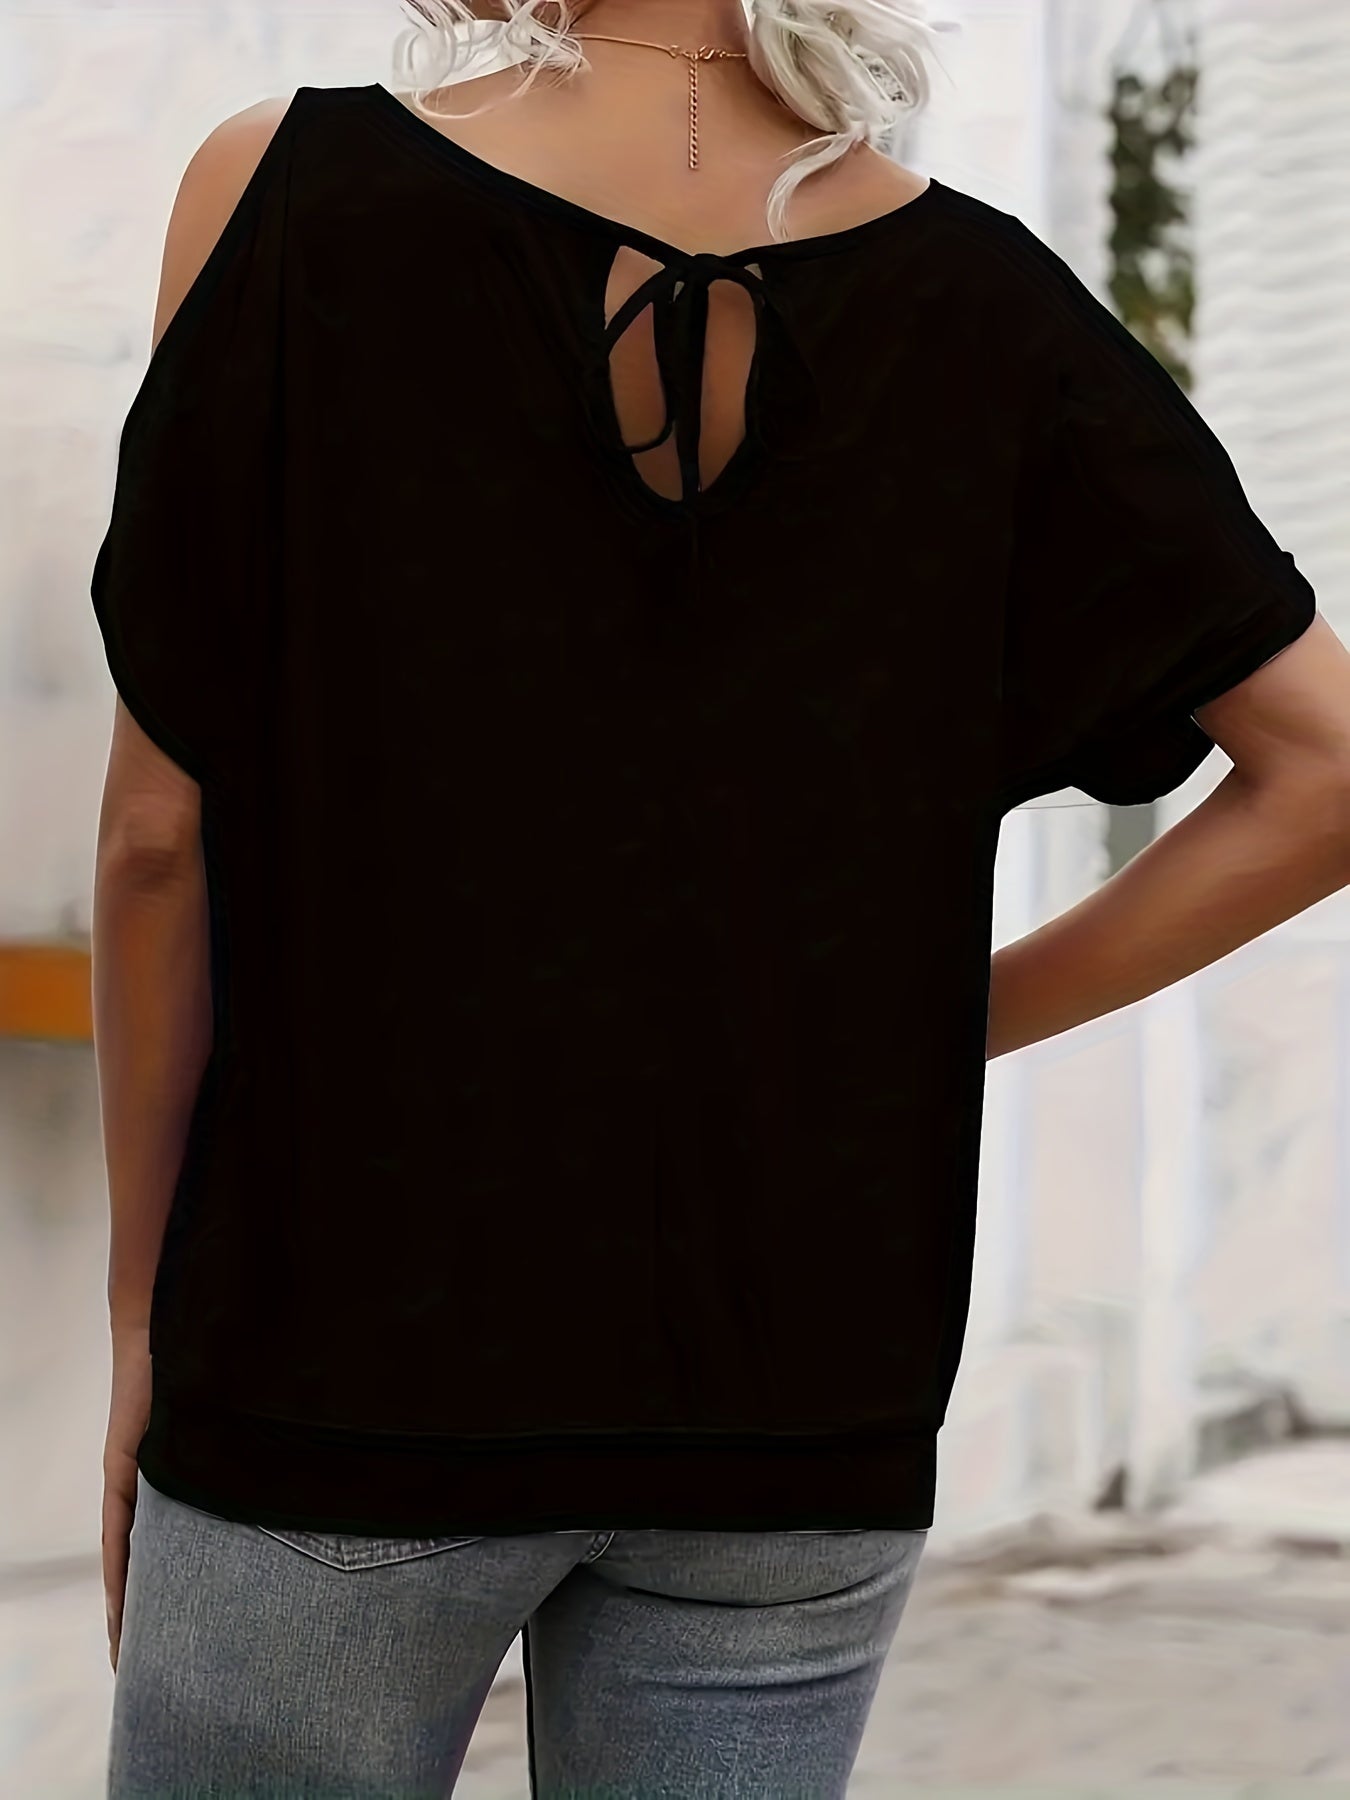 Vzyzv Plus Size Elegant T-shirt, Women's Plus Solid Cut Out Batwing Sleeve Round Neck Tie Back Slight Stretch T-shirt